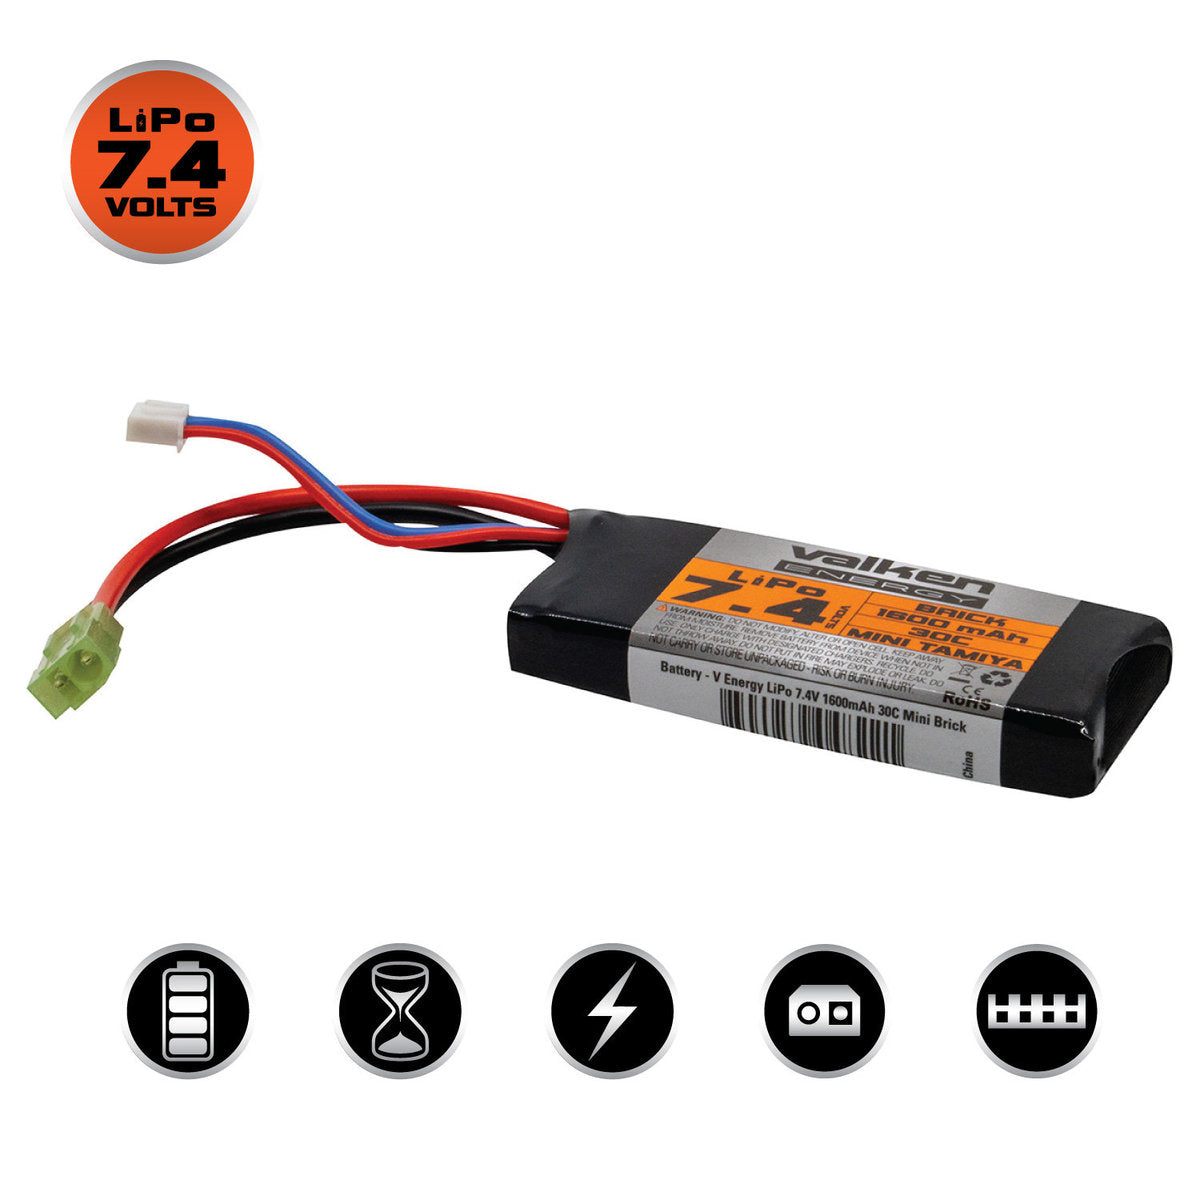 Battery - V Energy LiPo 7.4 1600mah brick